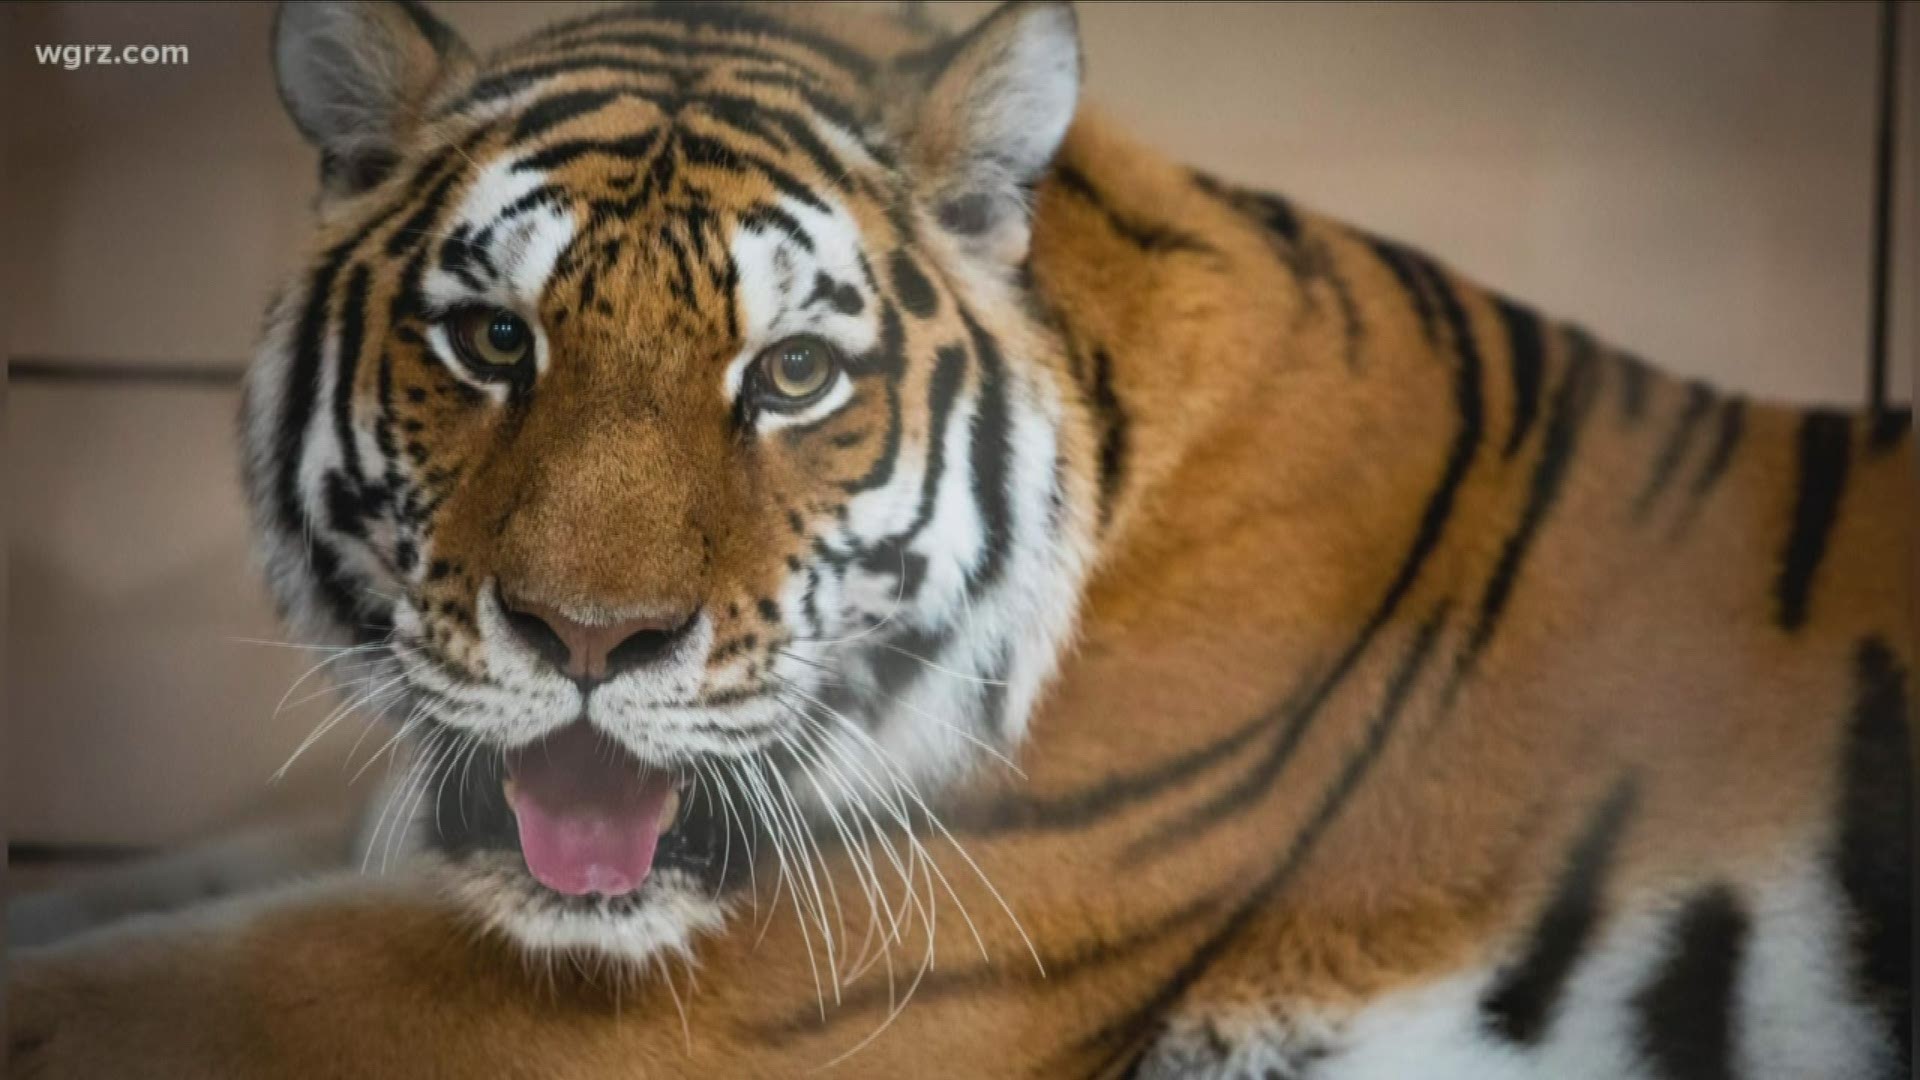 Buffalo Zoo welcomes new amur tiger 'Zhanna'